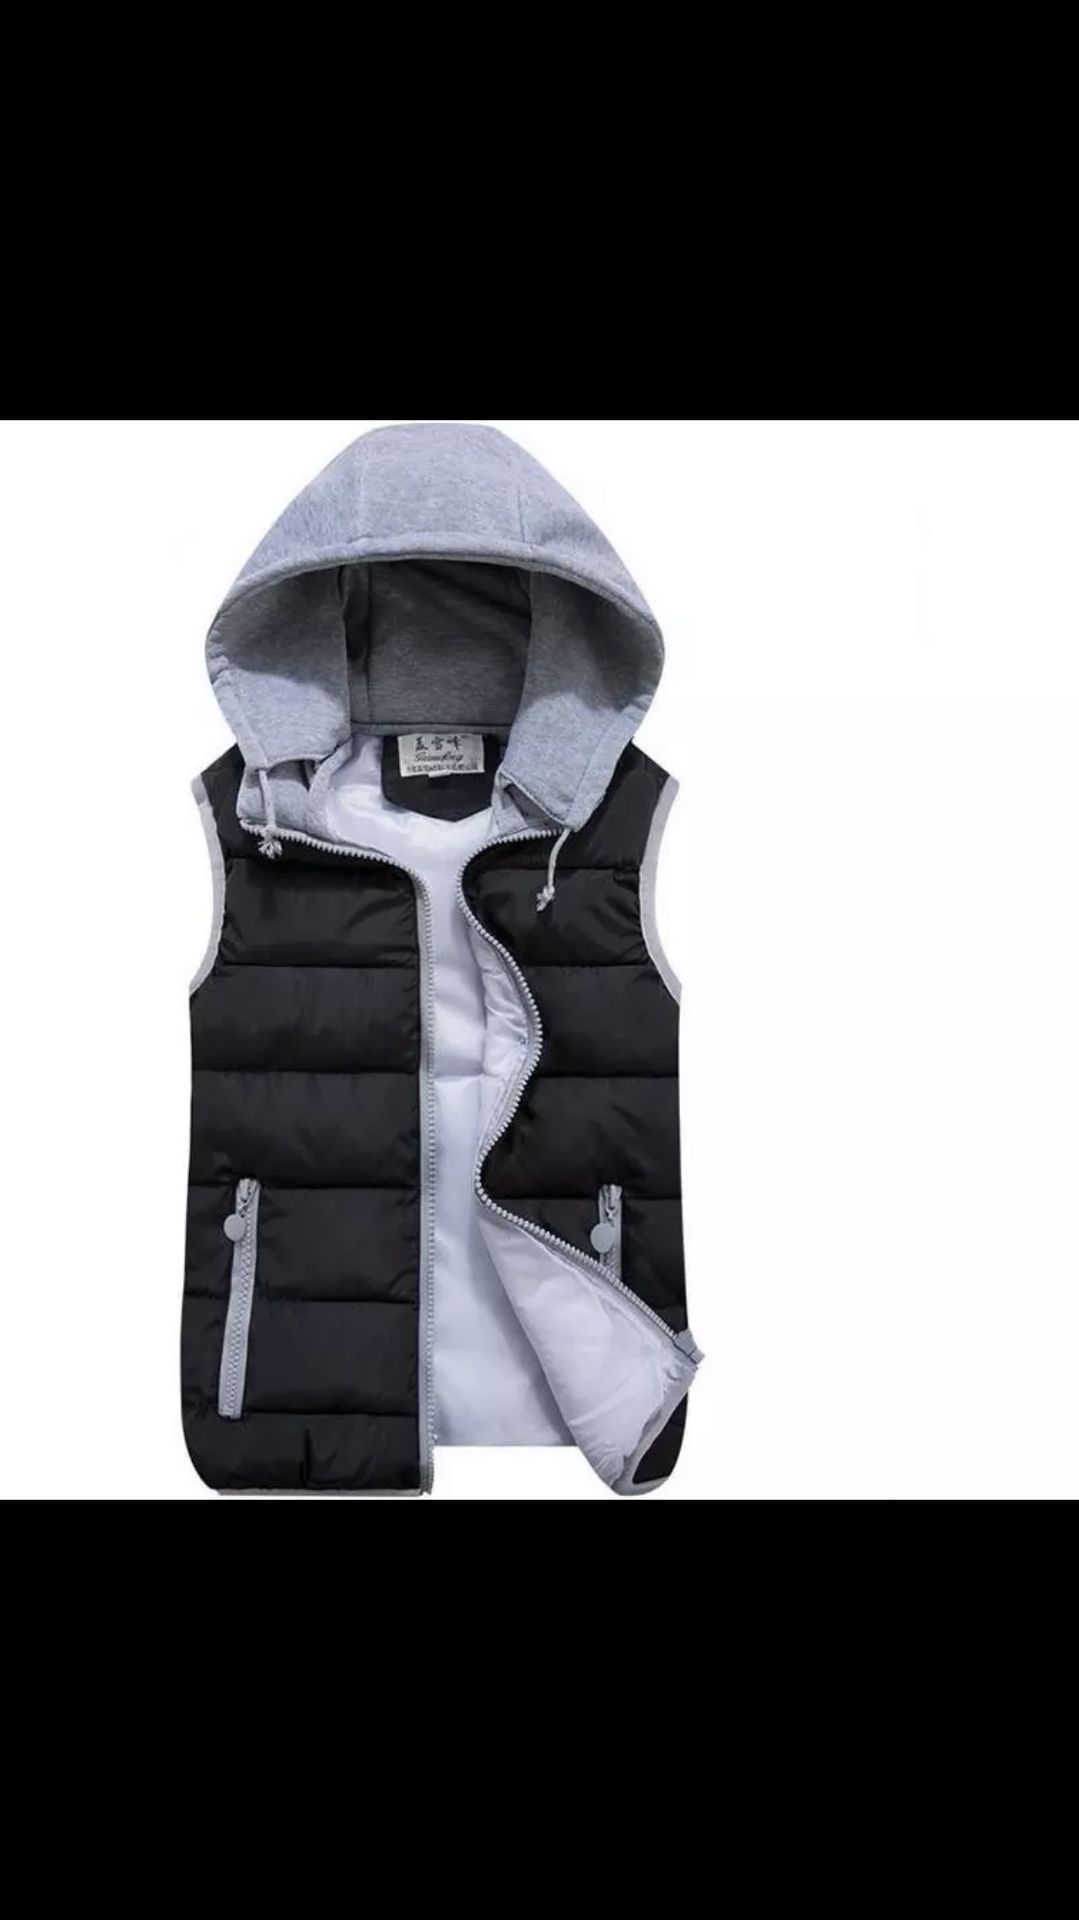 Winter Vest For Men And Women Hooded Sleeveless Soft Warm Jacket Sweater Zipper size as kids 10-12